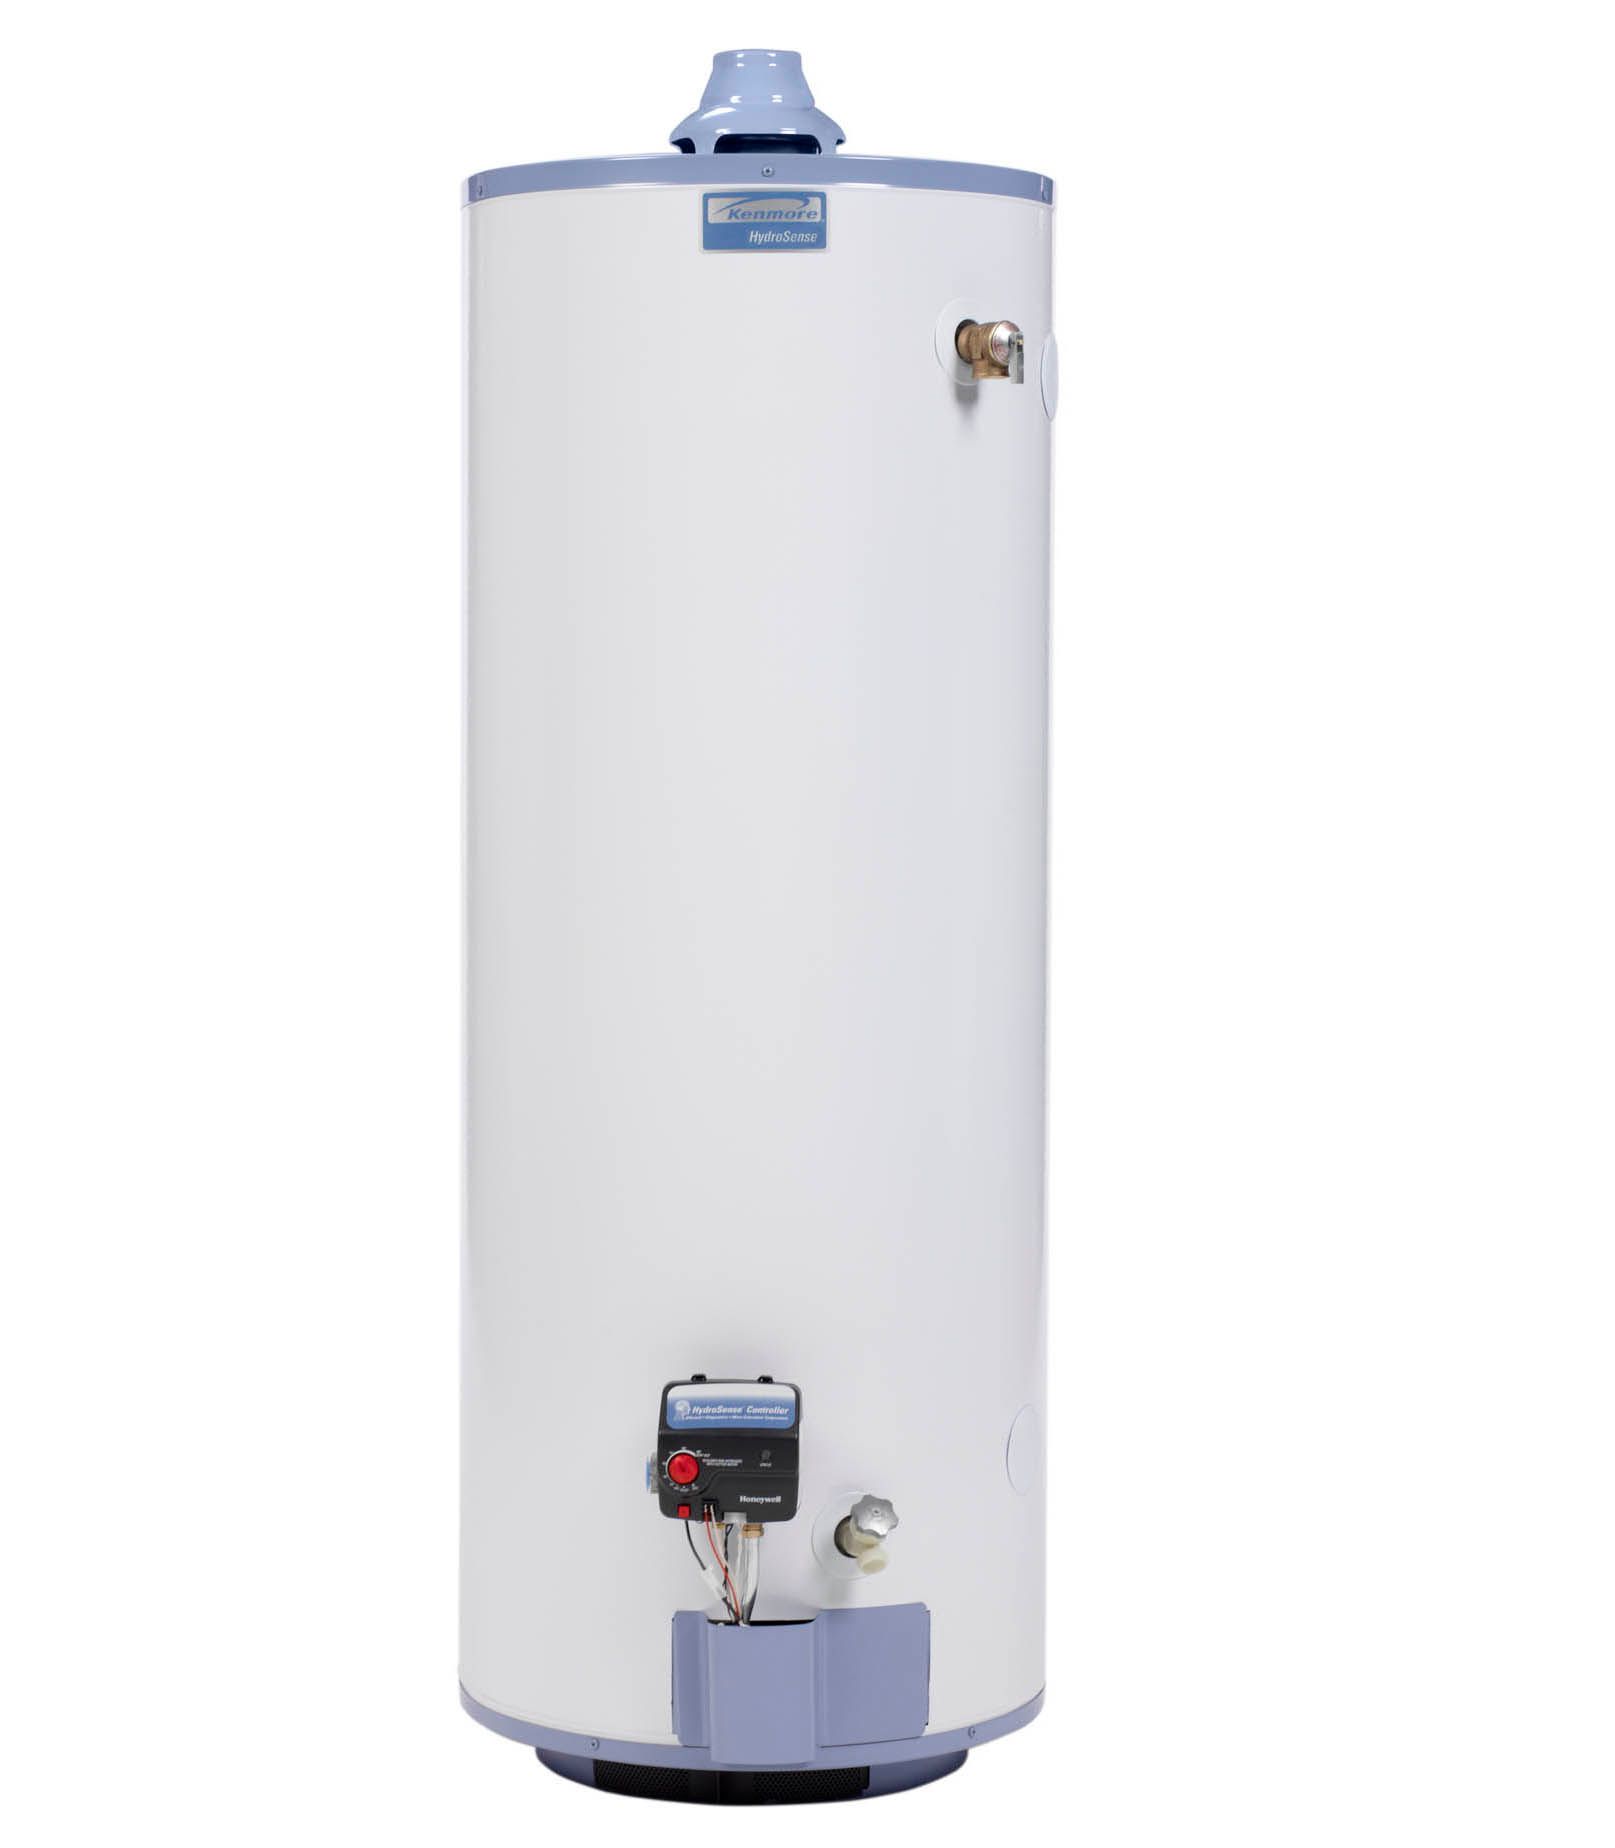 kenmore-natural-gas-water-heater-50-gal-33453-sears